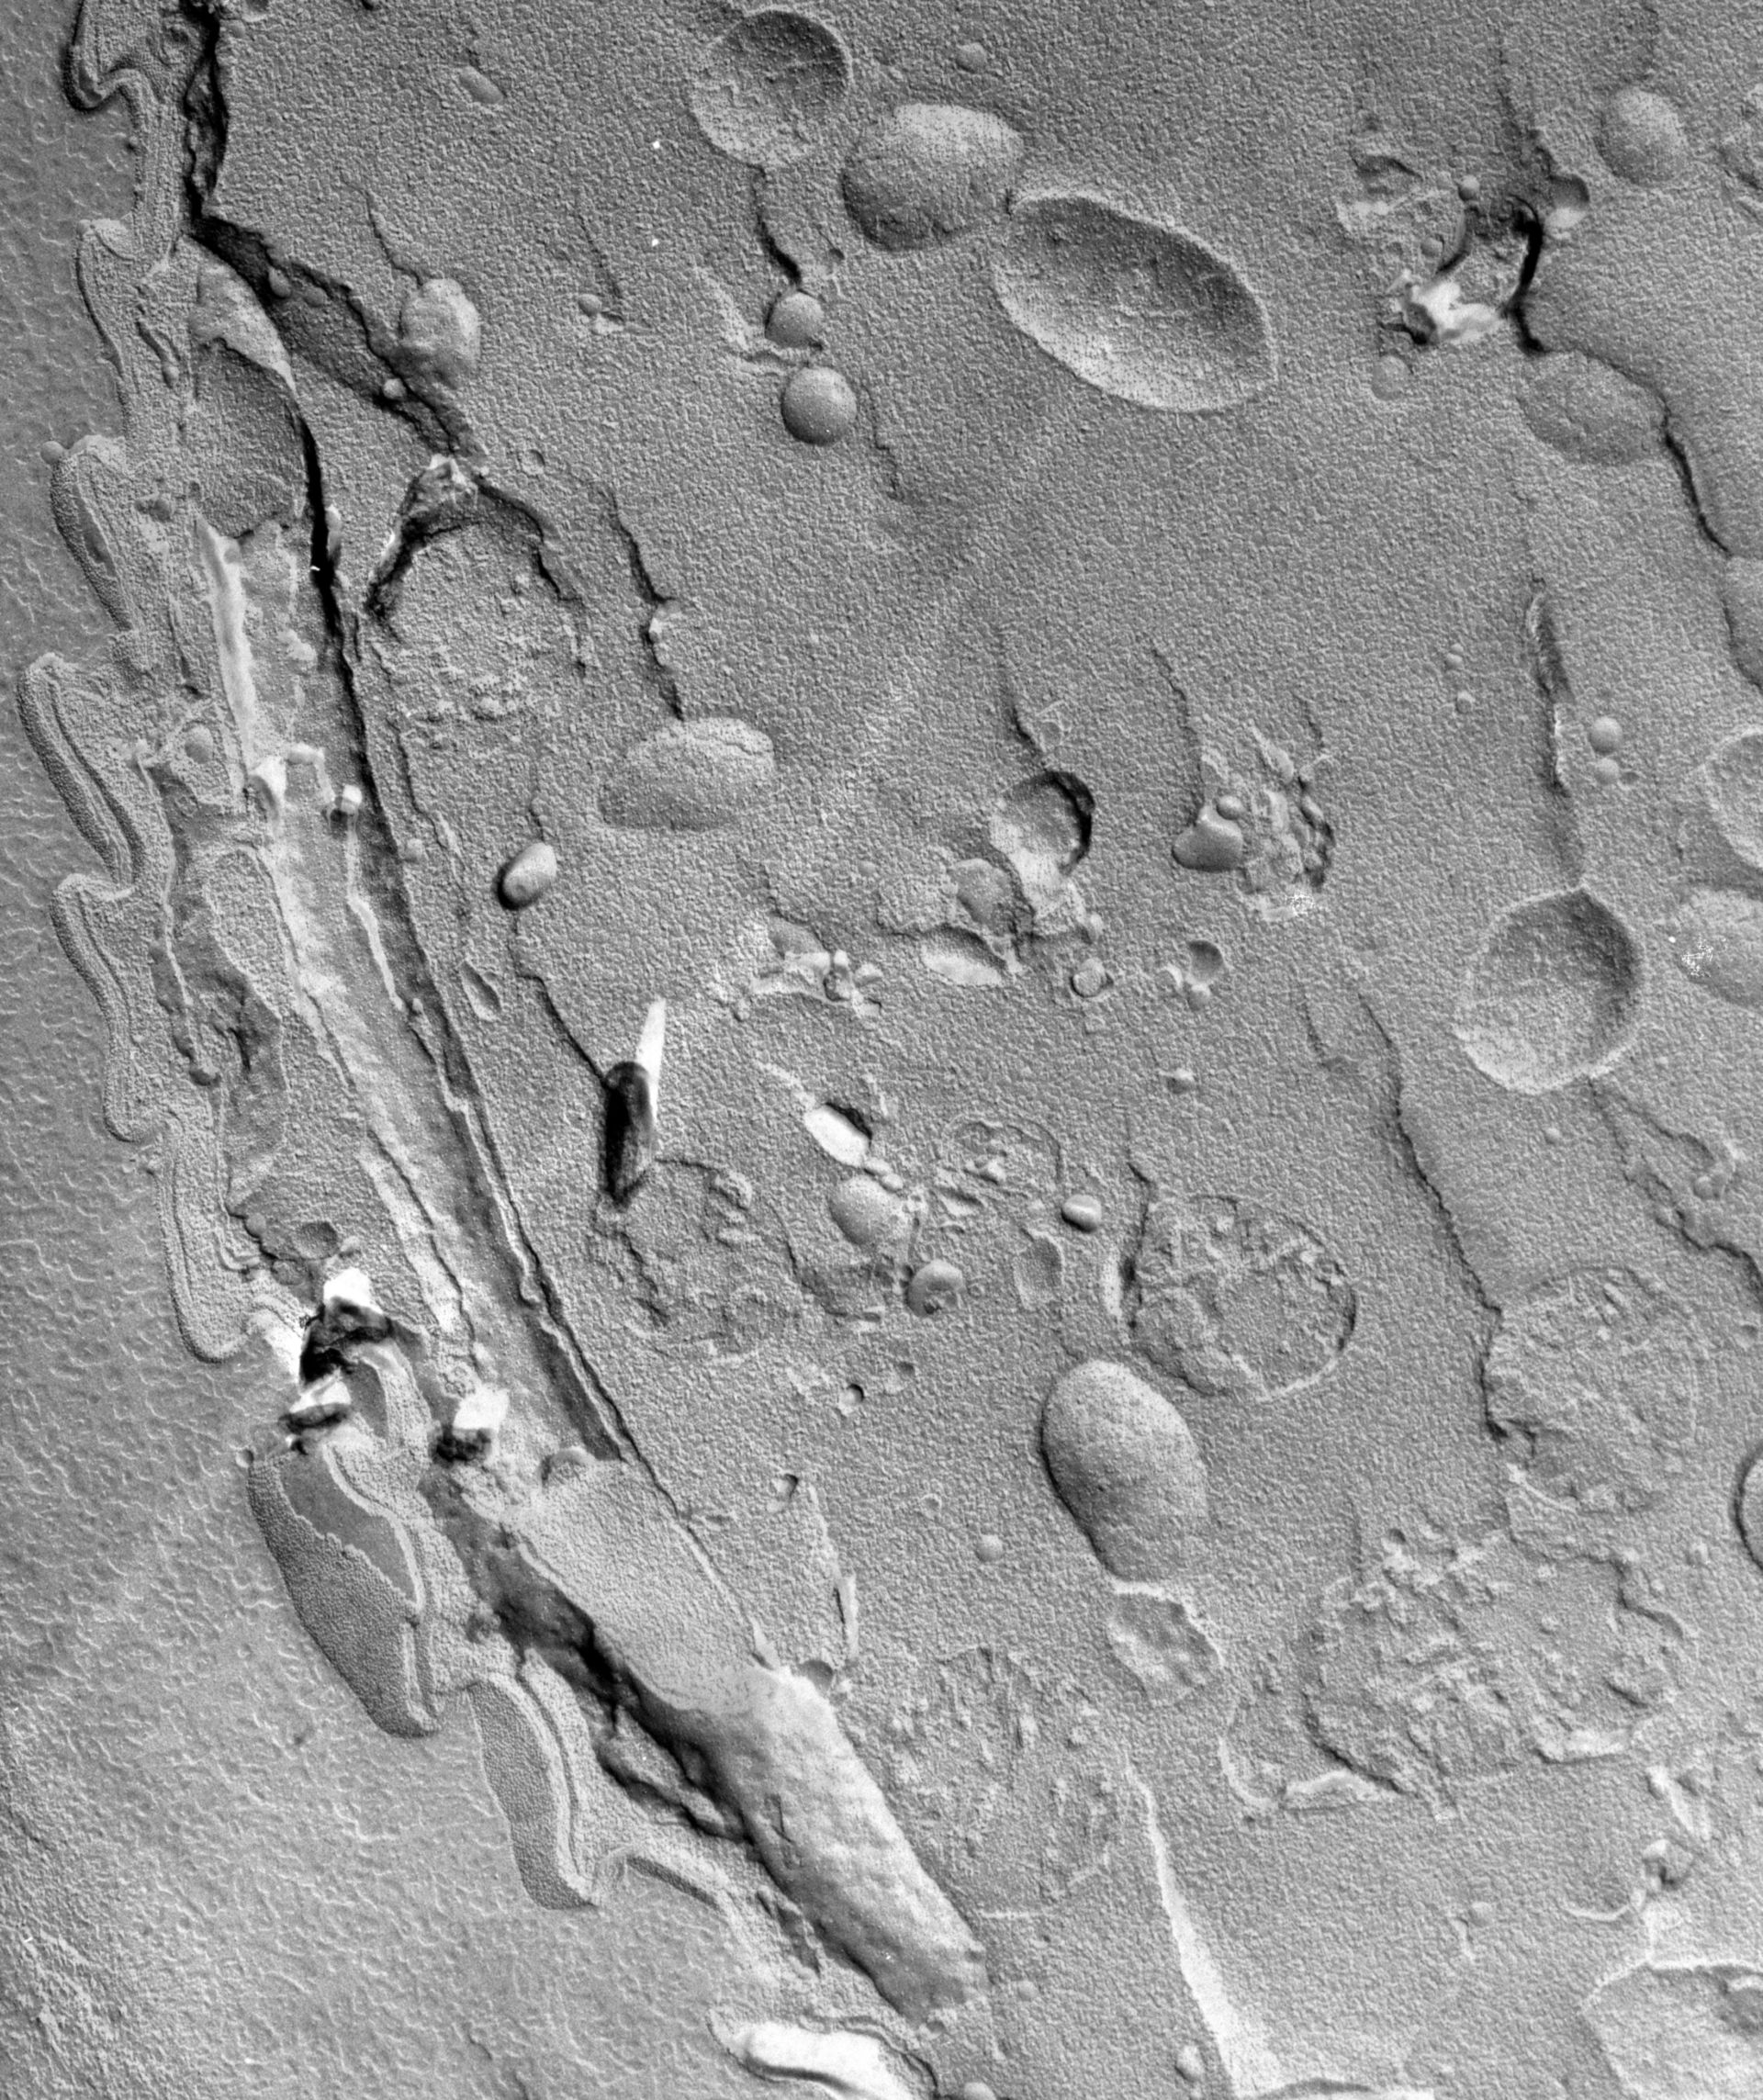 Vorticella microstoma (Cytoplasm) - CIL:39503